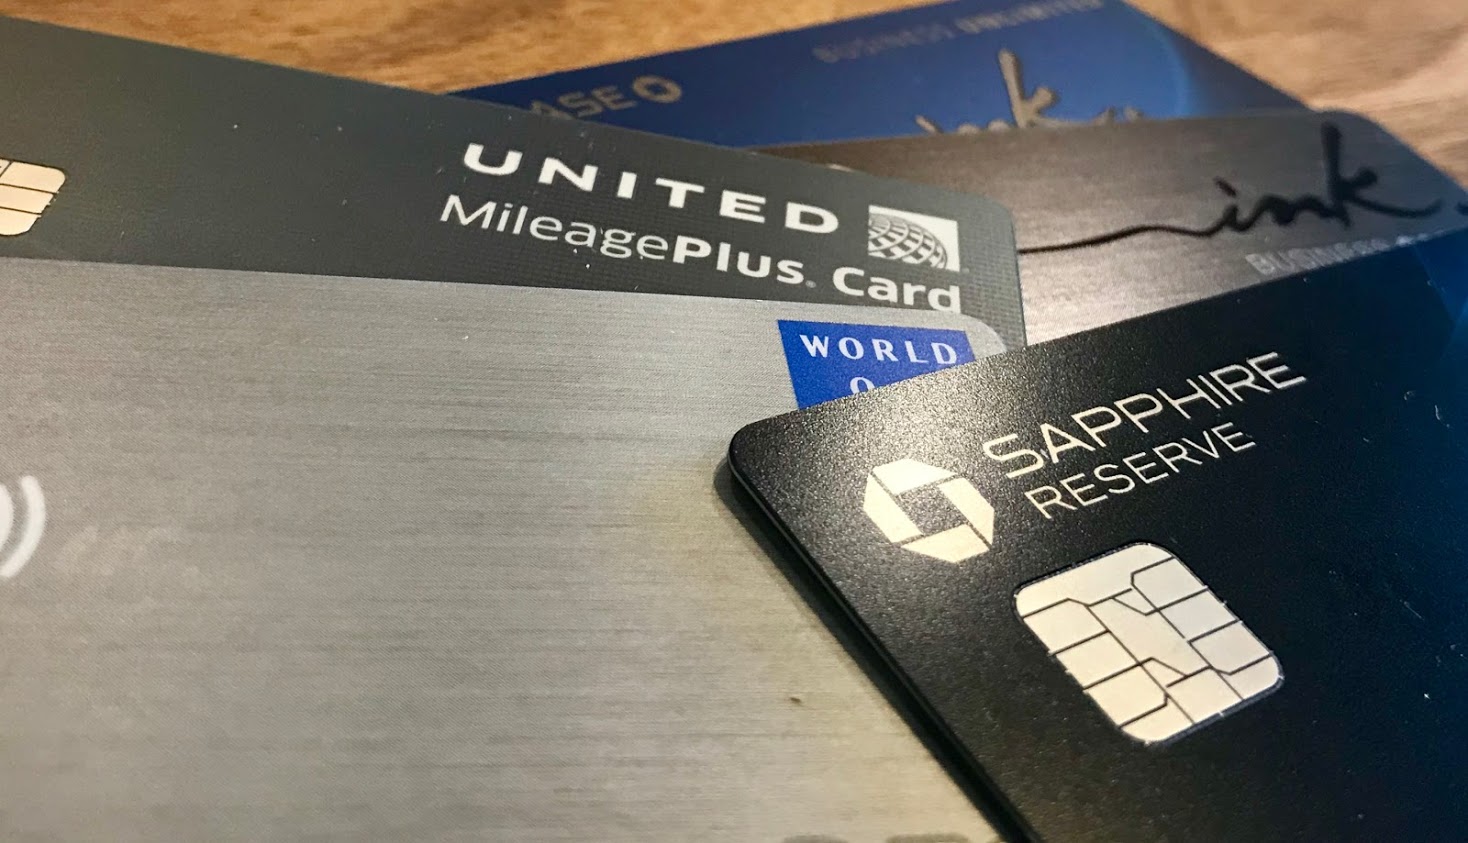 Beginner credit card plan